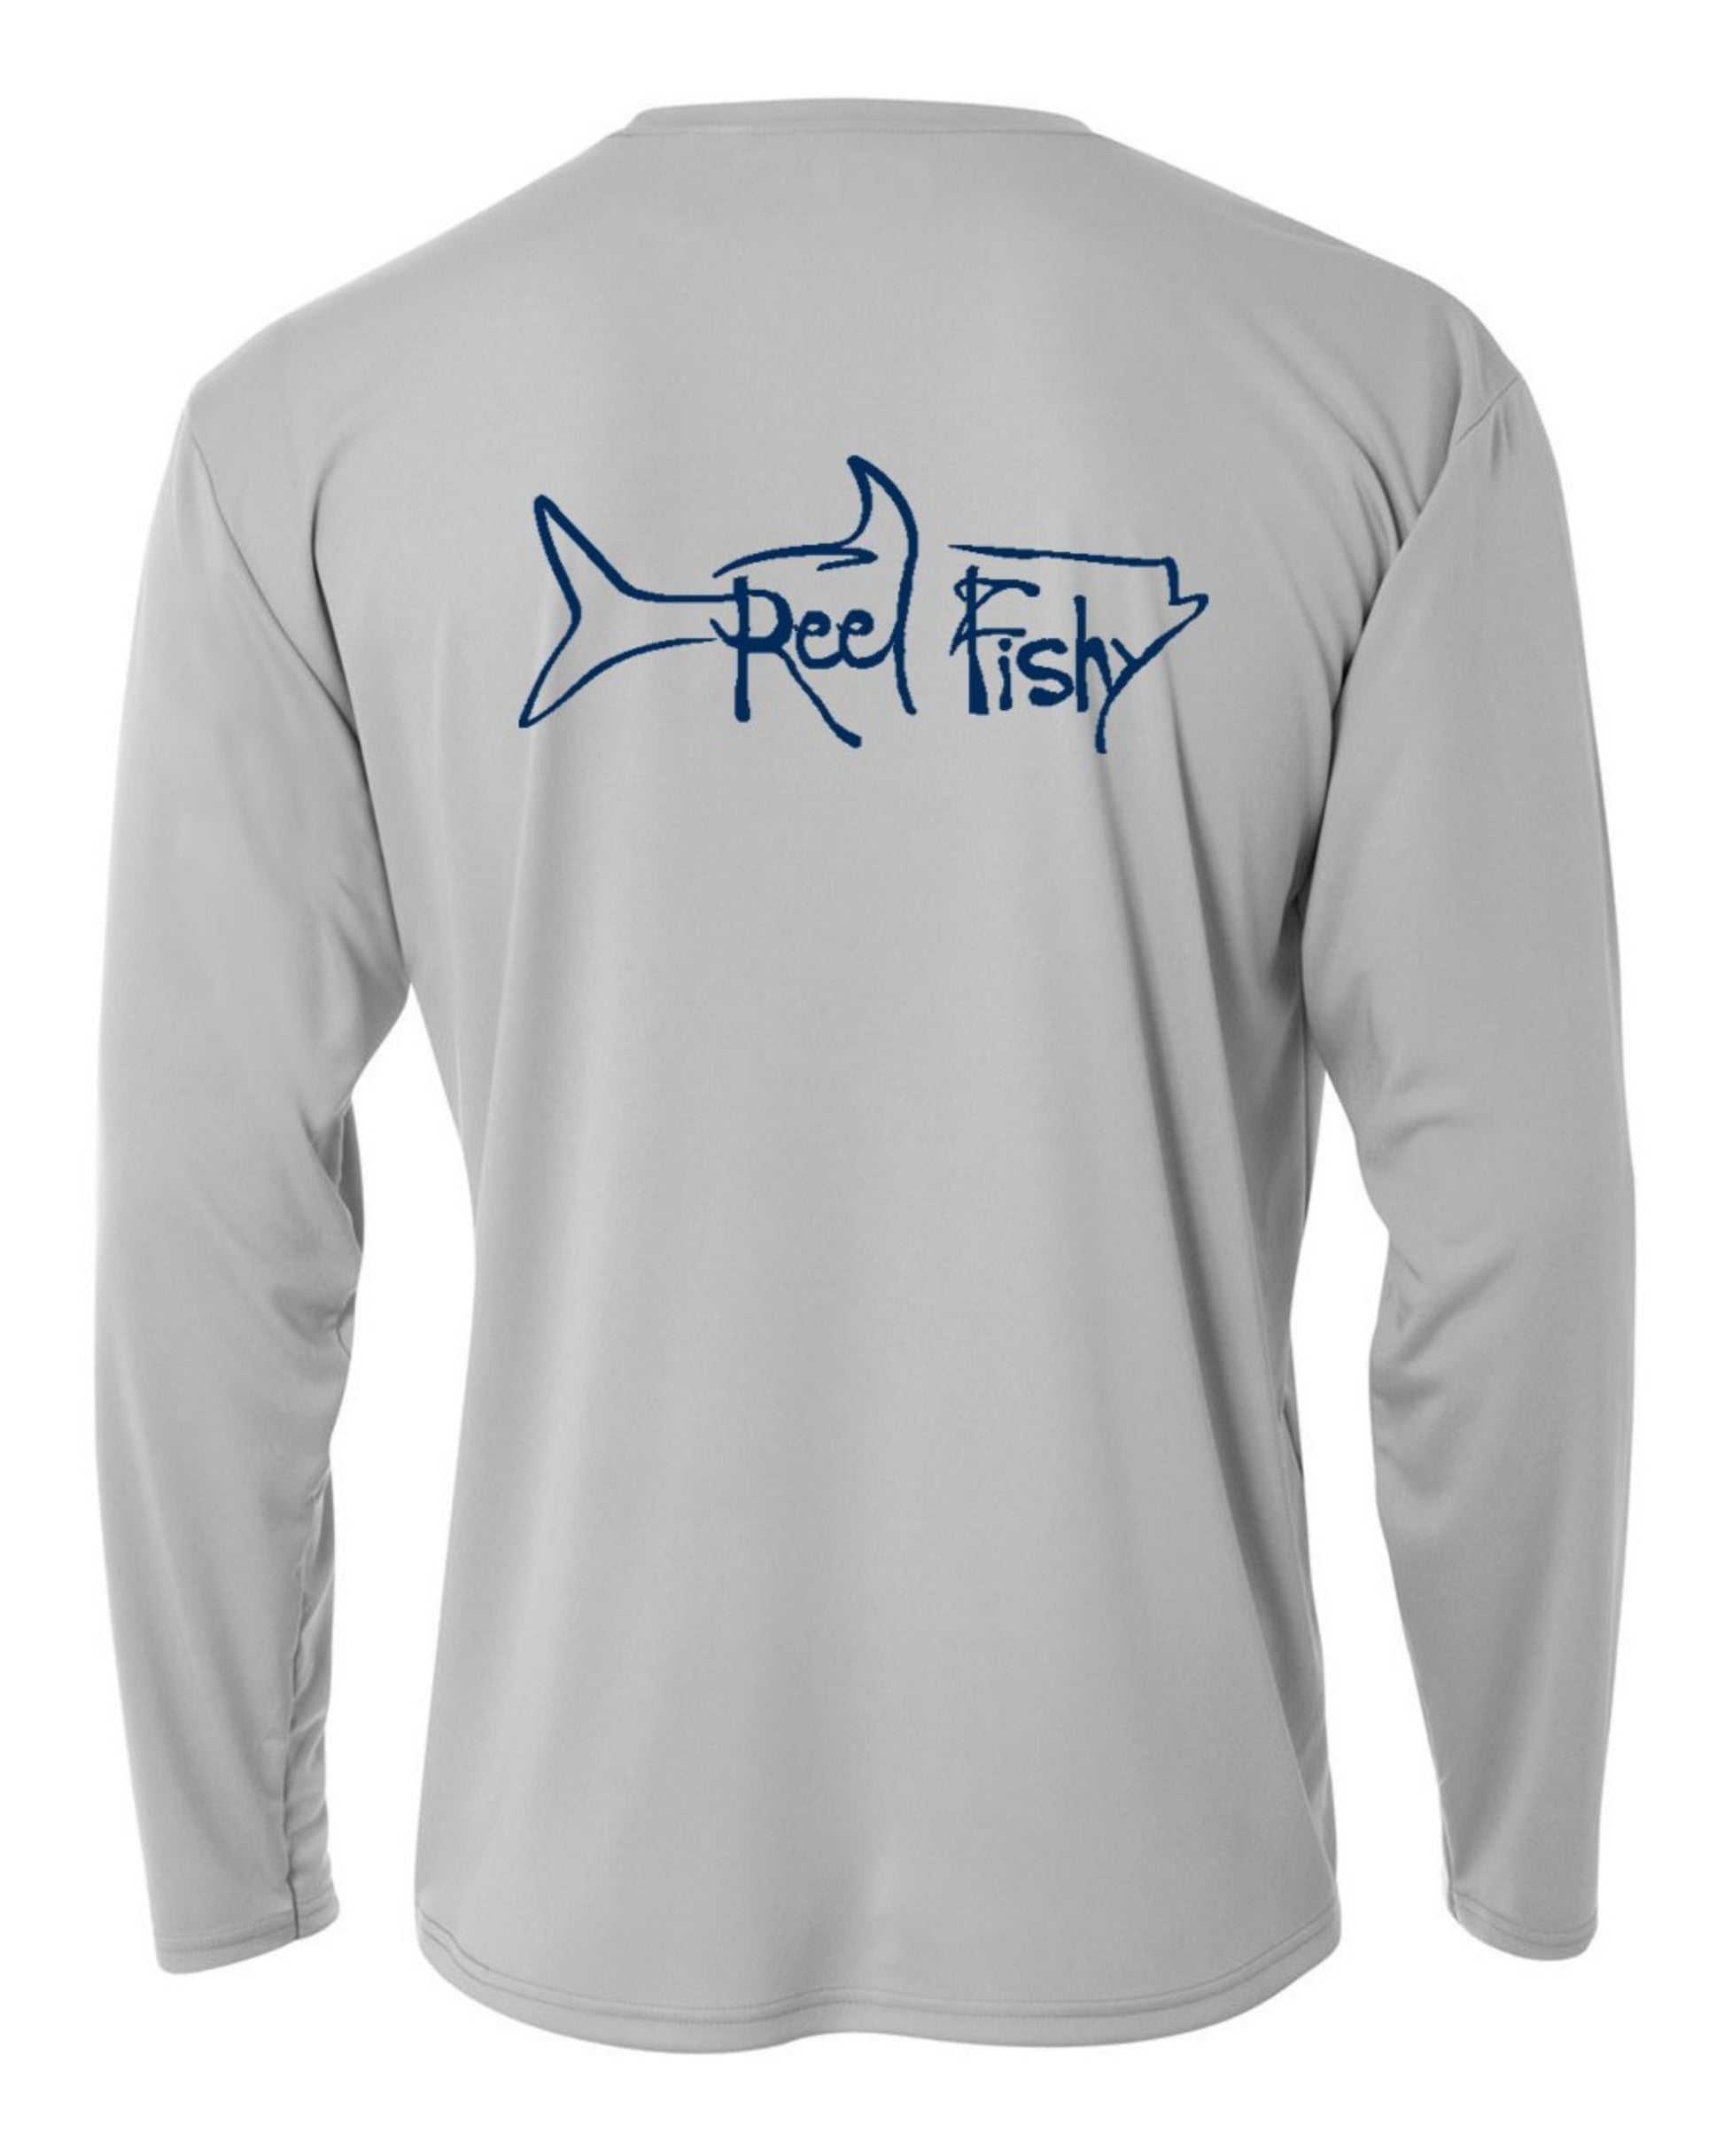 Youth UPF 50+ Camo Long Sleeve Fishing Shirt FS08Y, White/Green Fishes / XL